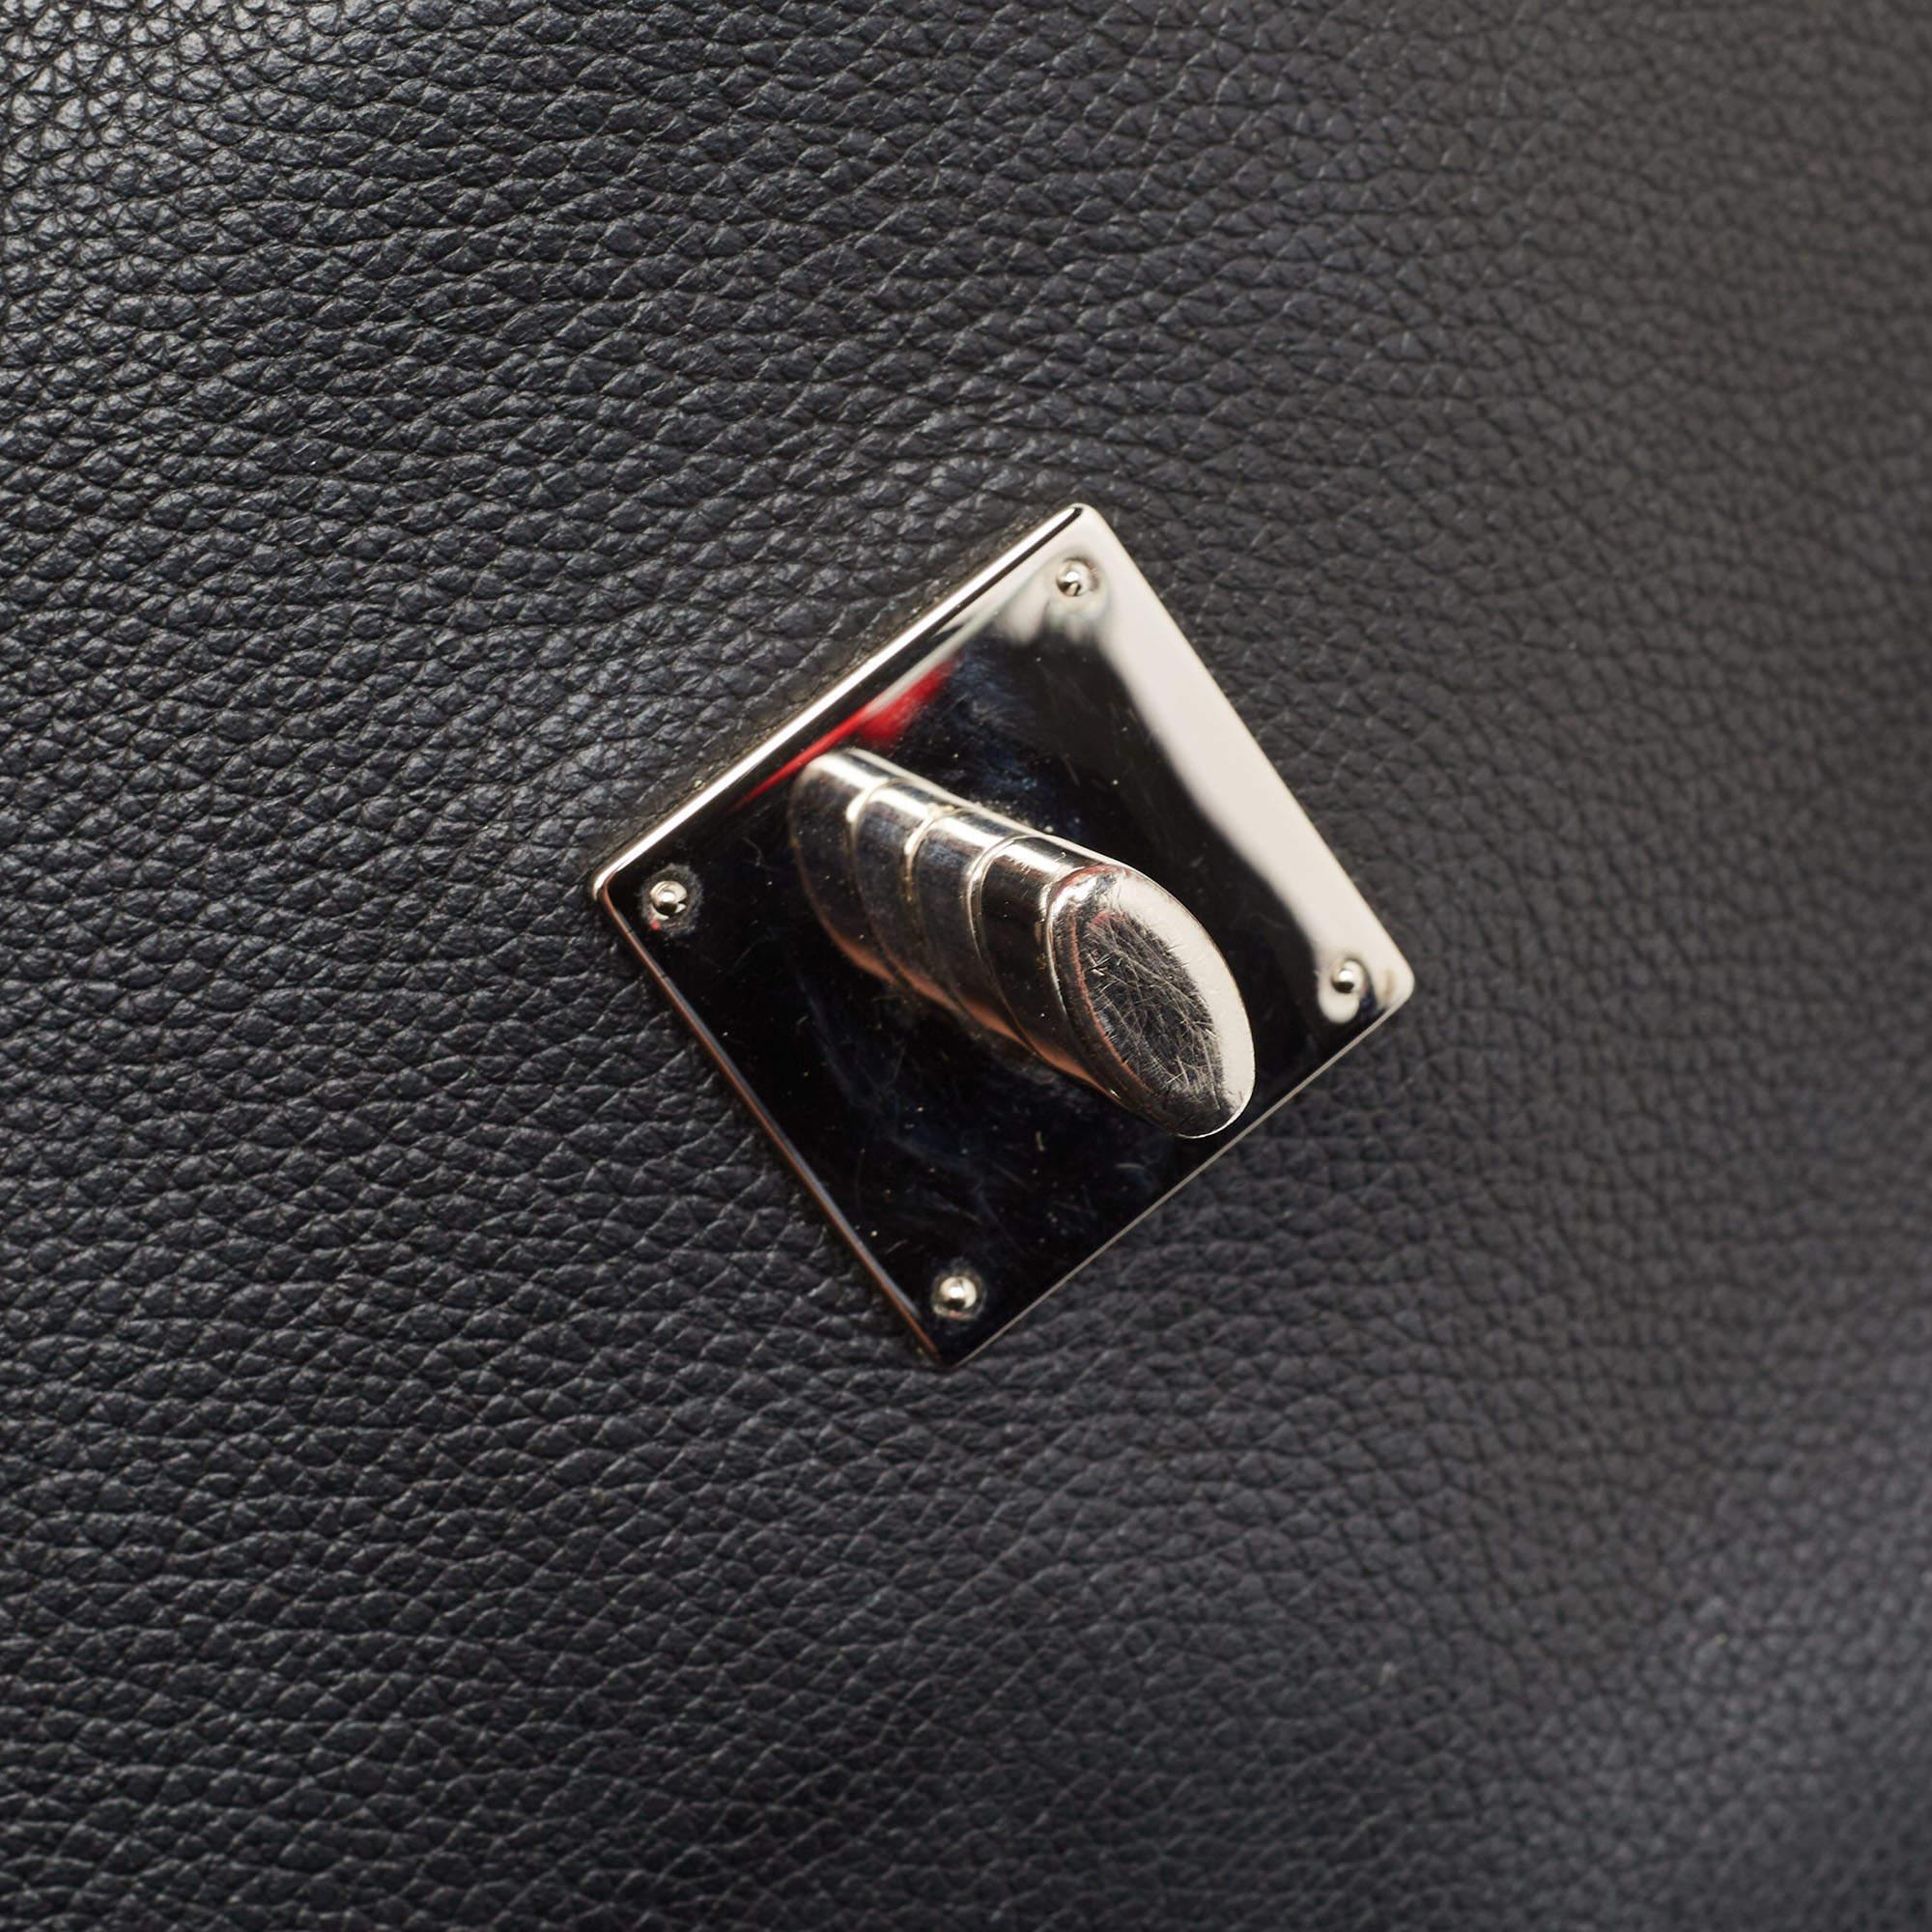 Louis Vuitton Black Leather Lockme II Bag For Sale 4